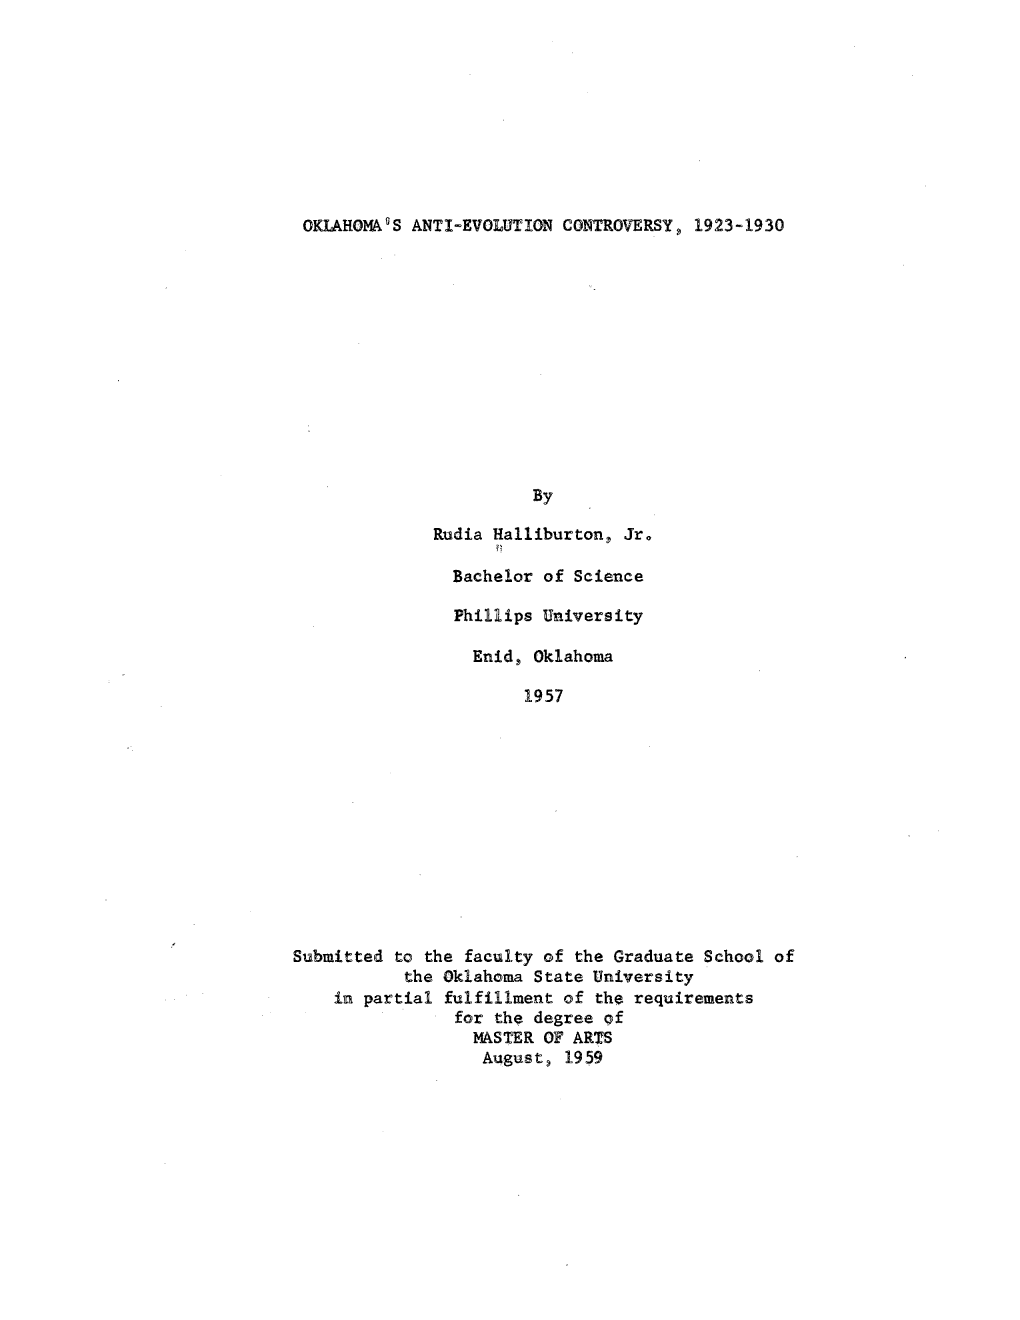 OKLAHOMA0S ANTI-EVOLUTION CONTROVERSY, 1923-1930 By